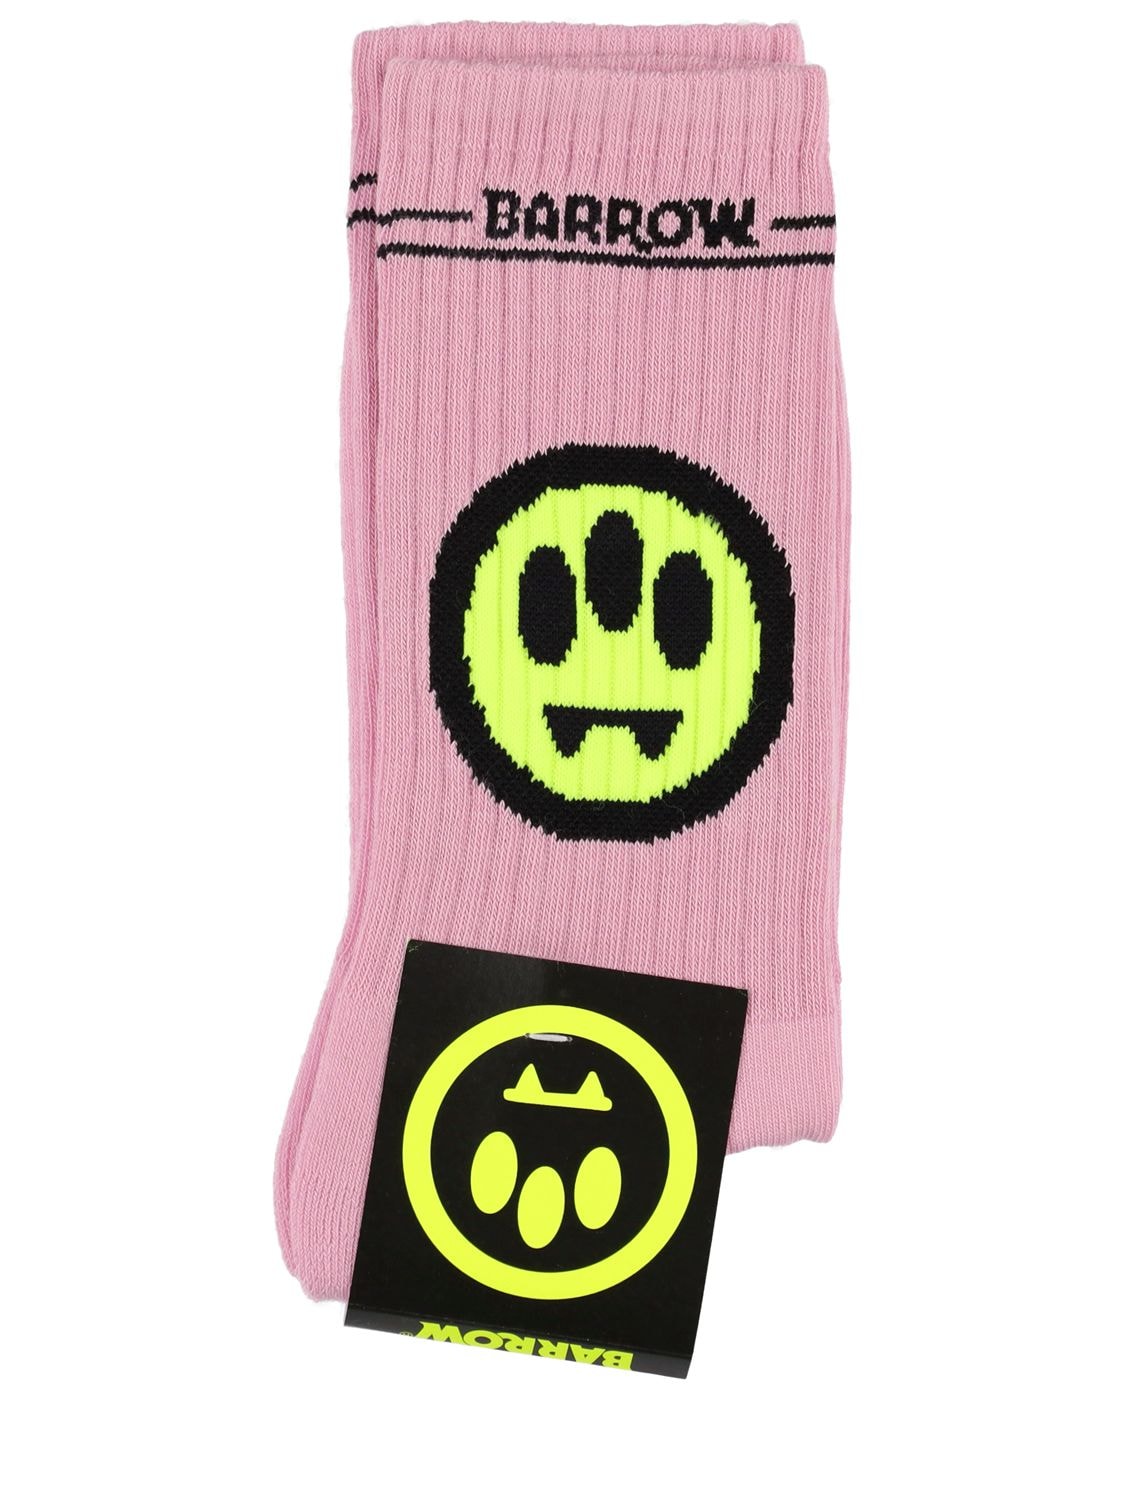 Barrow Mono Logo Cotton Blend Socks In Pink